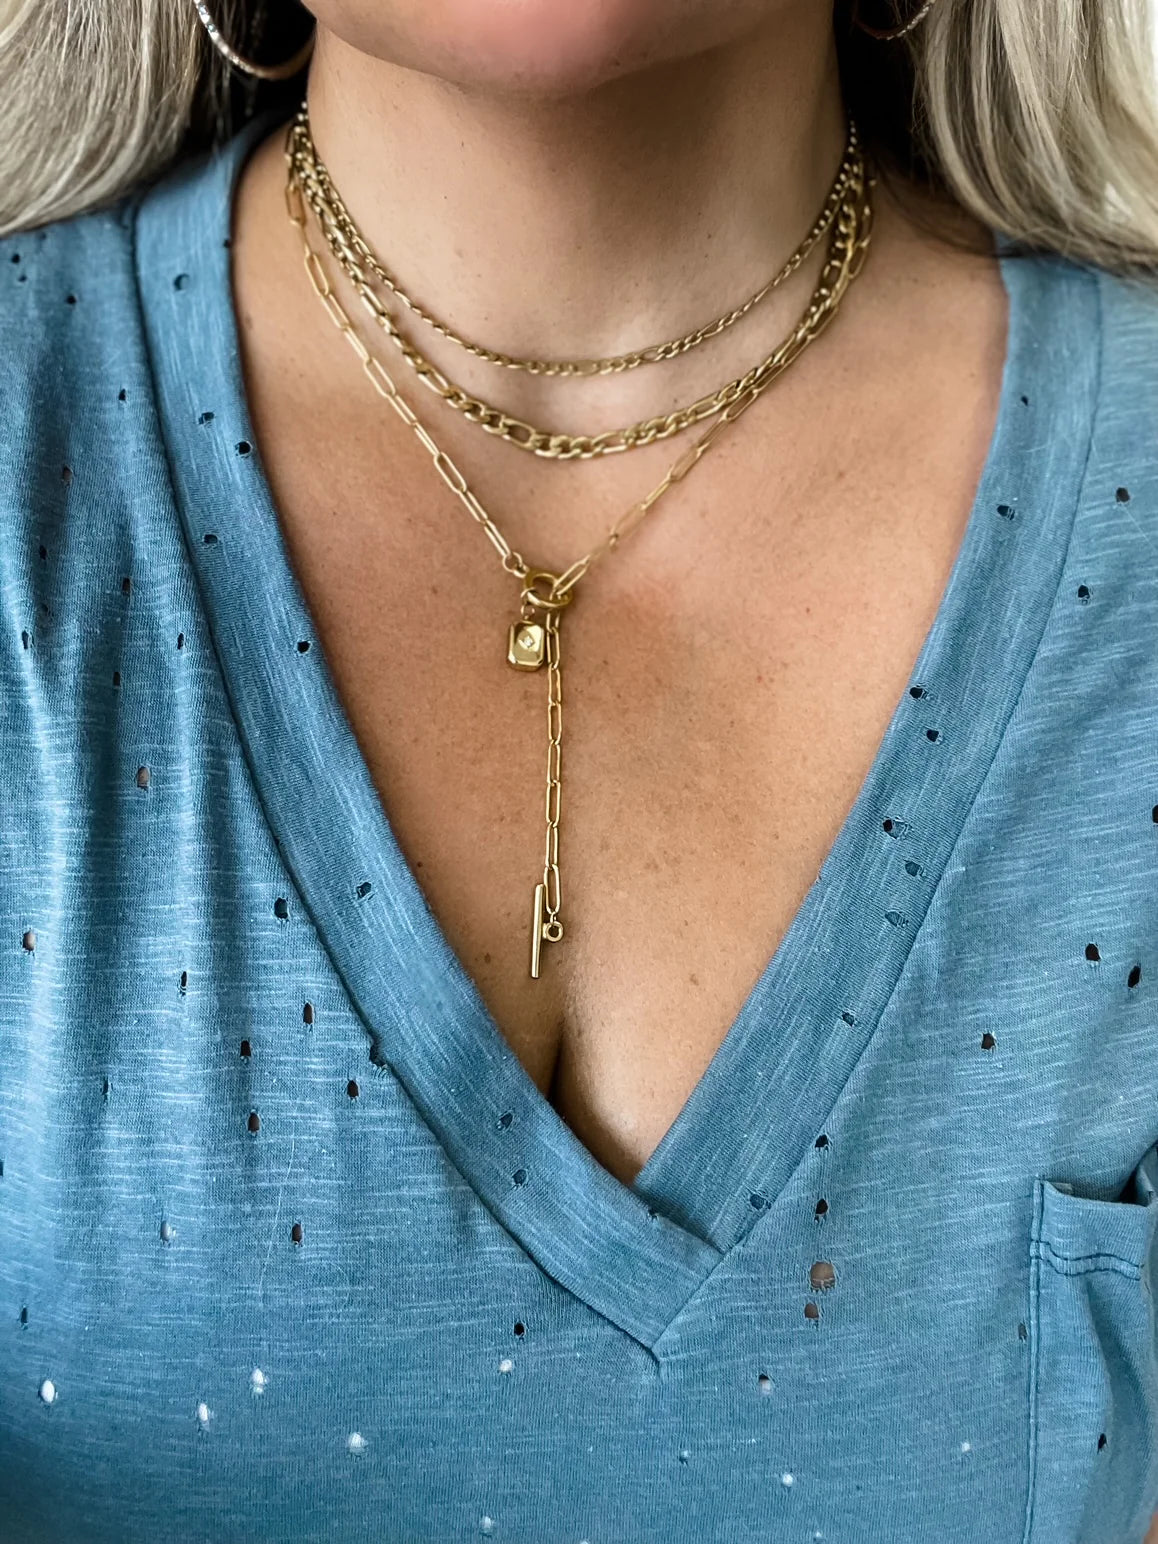 Make a Wish Pendant Chain Necklace